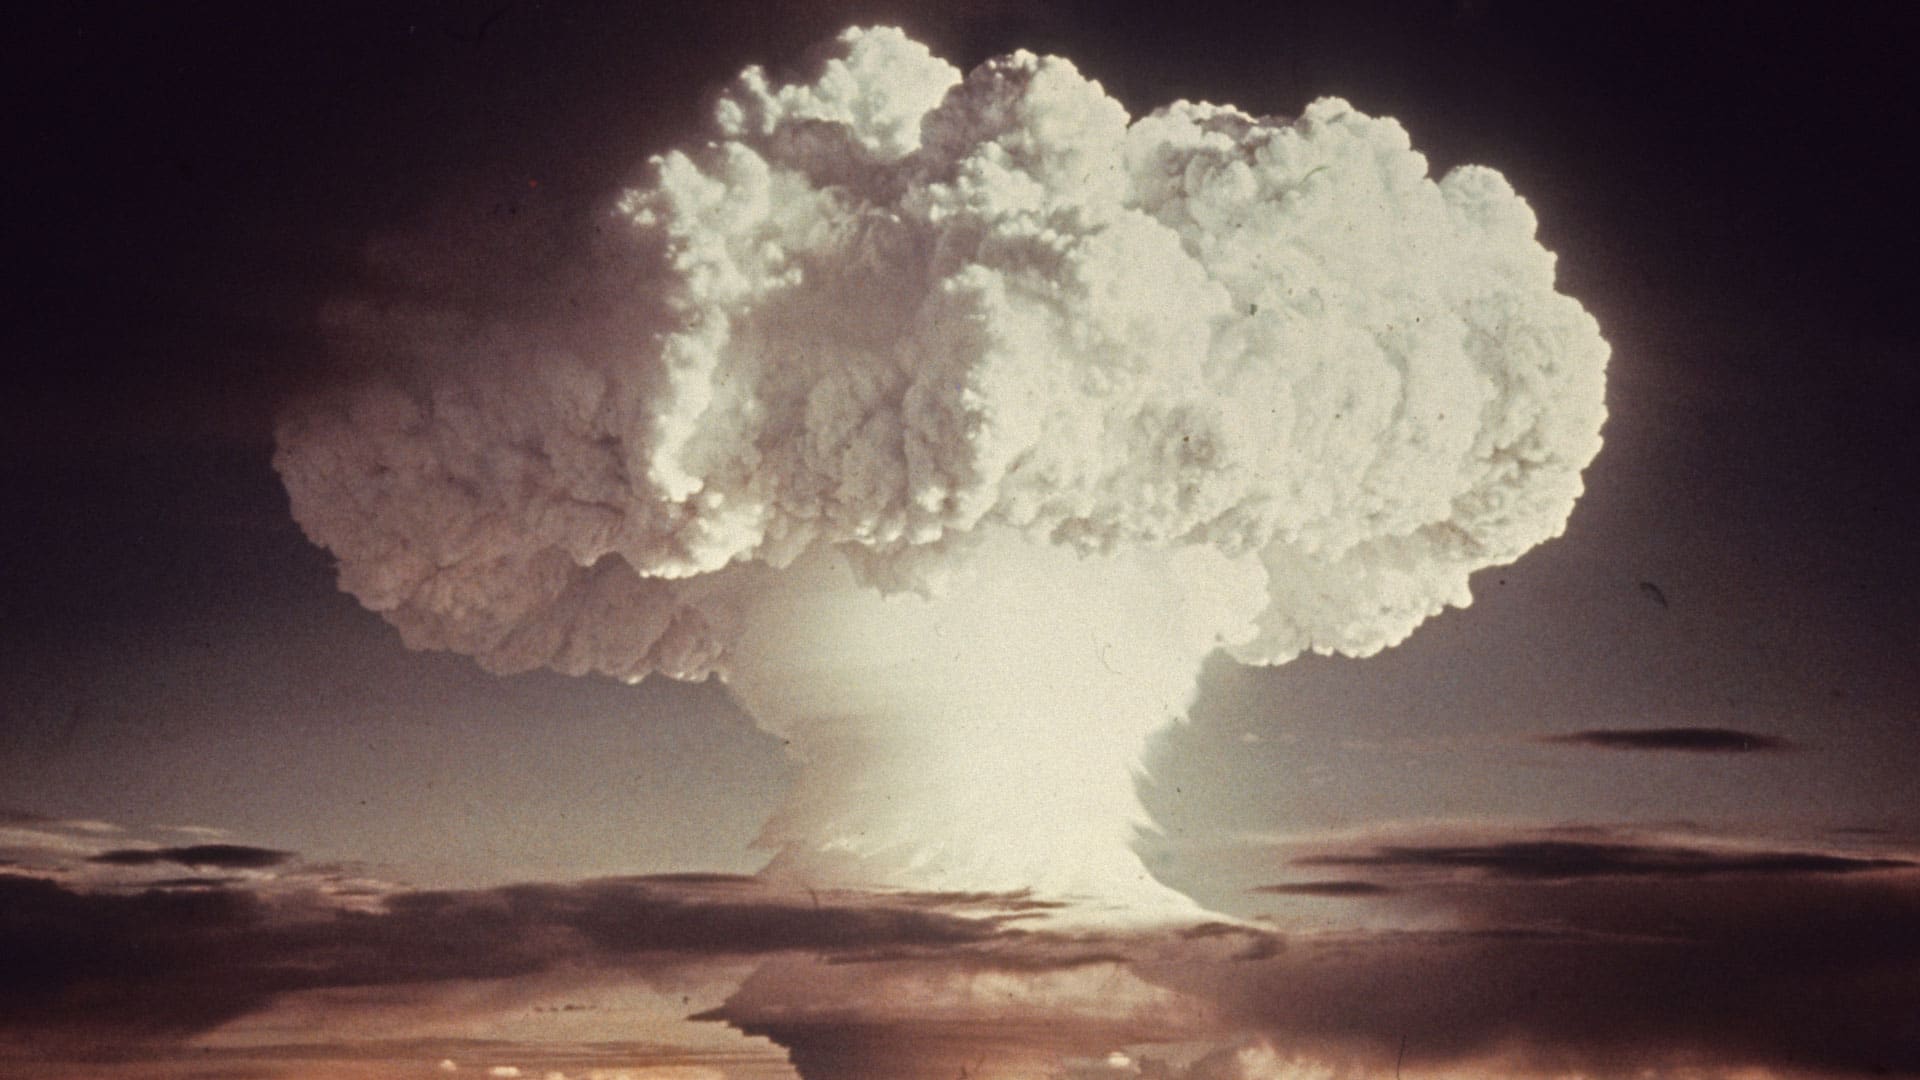 Эпицентр взрыва «царь-бомбы» ан602.